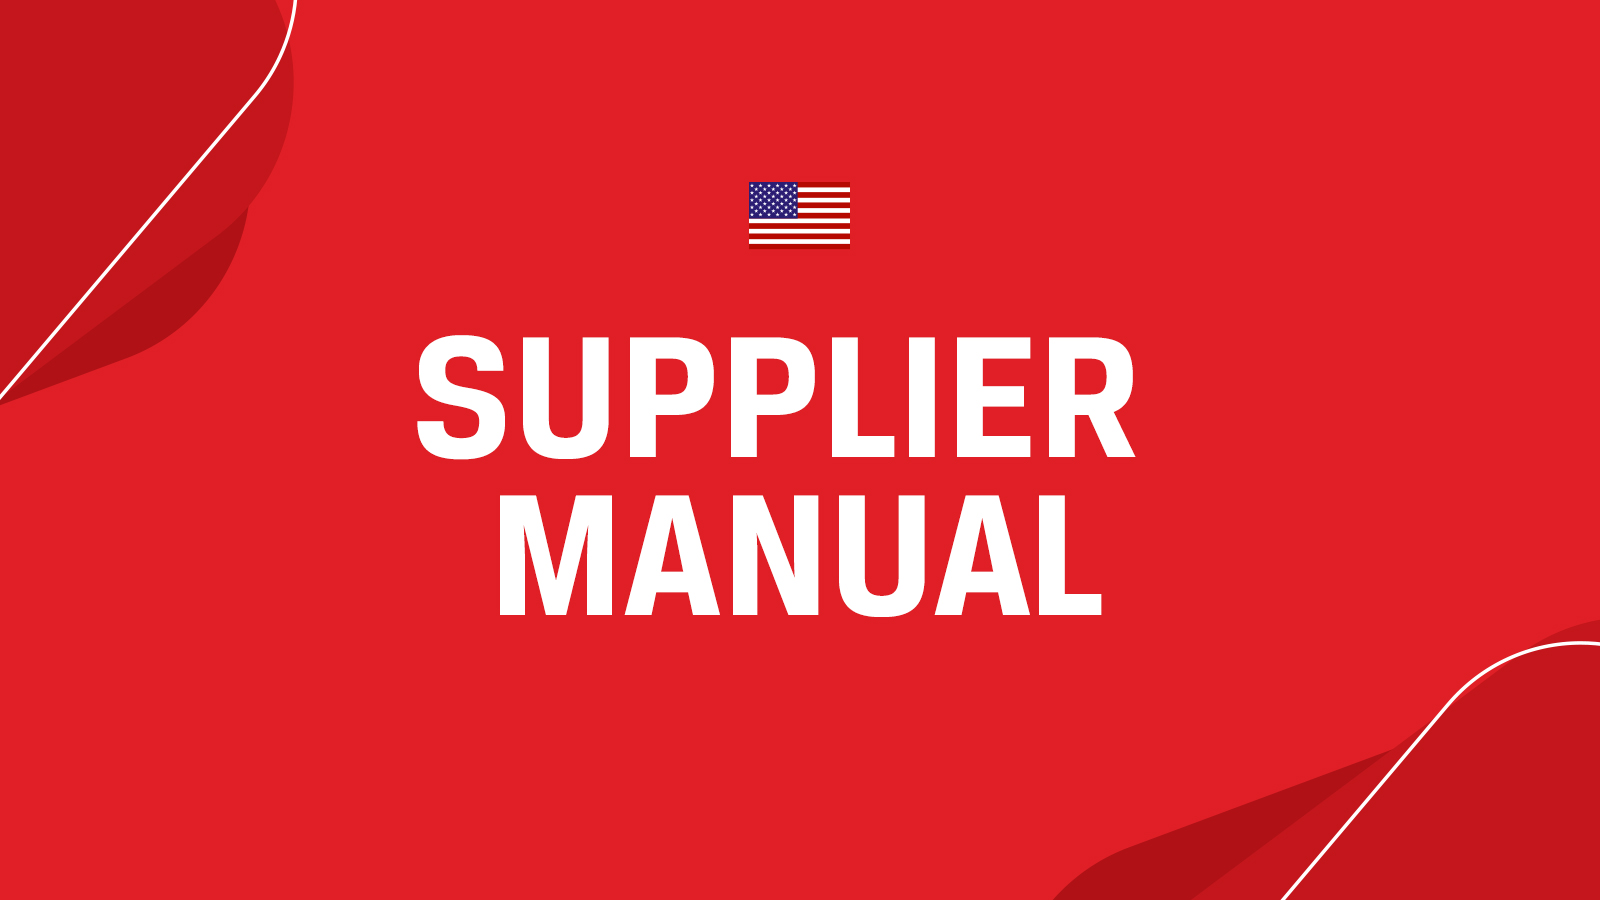 Supplier Manual - English